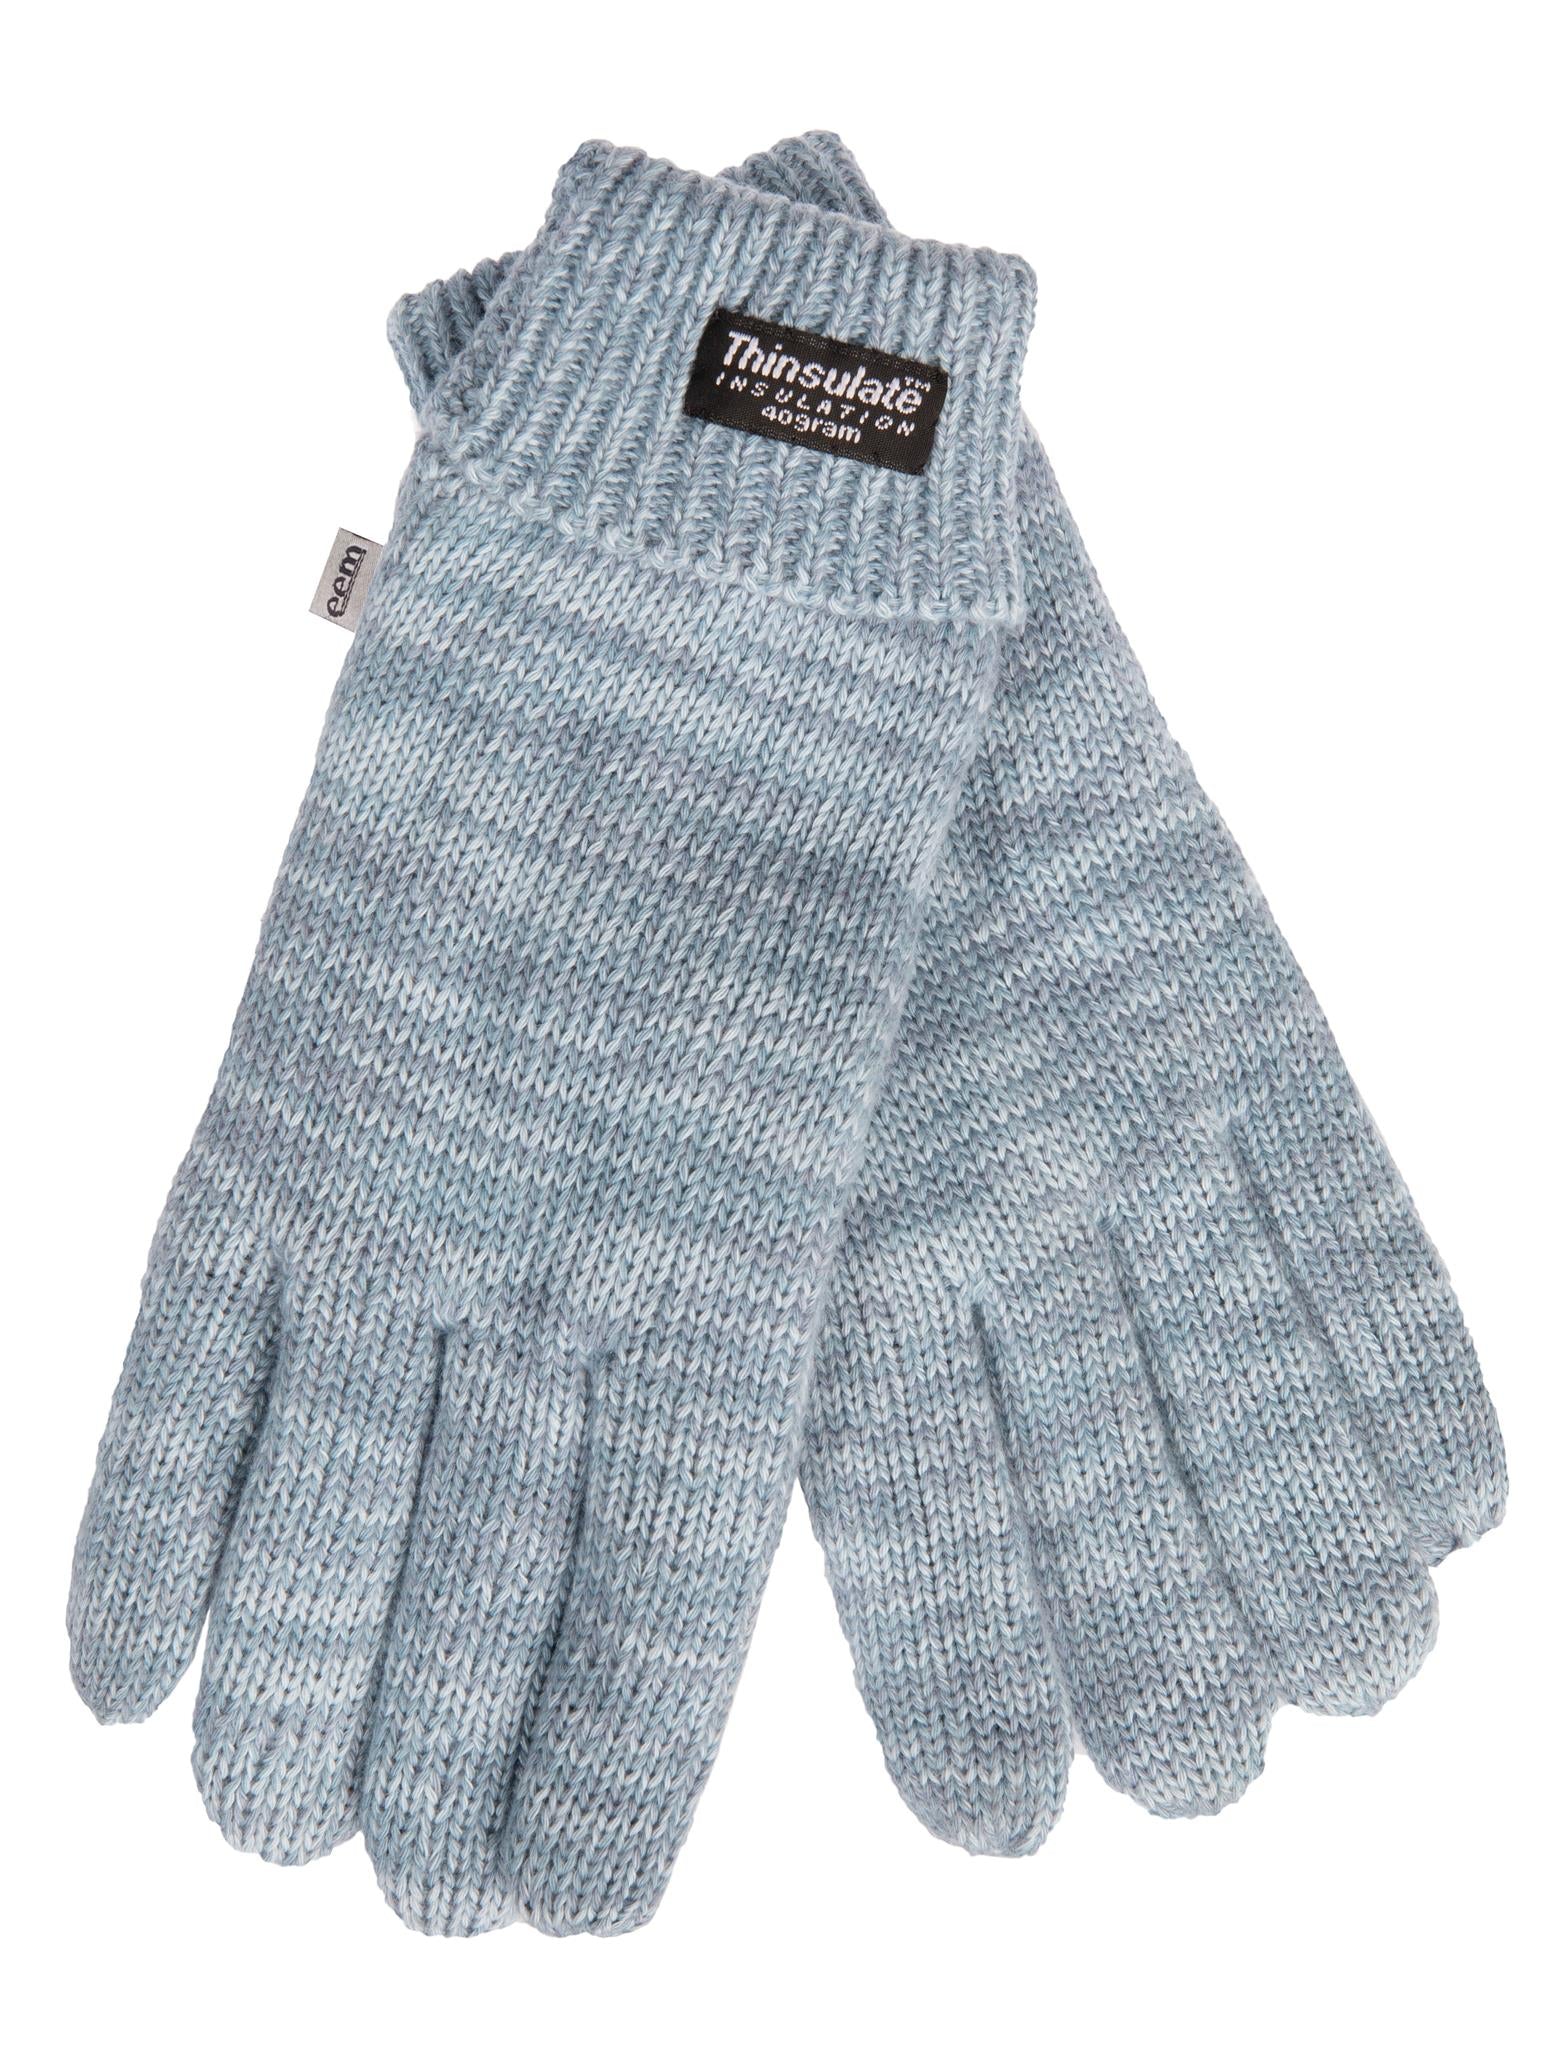 EEM Strick Kinderhandschuhe, weiche Baumwolle, Thinsulate Thermofutter